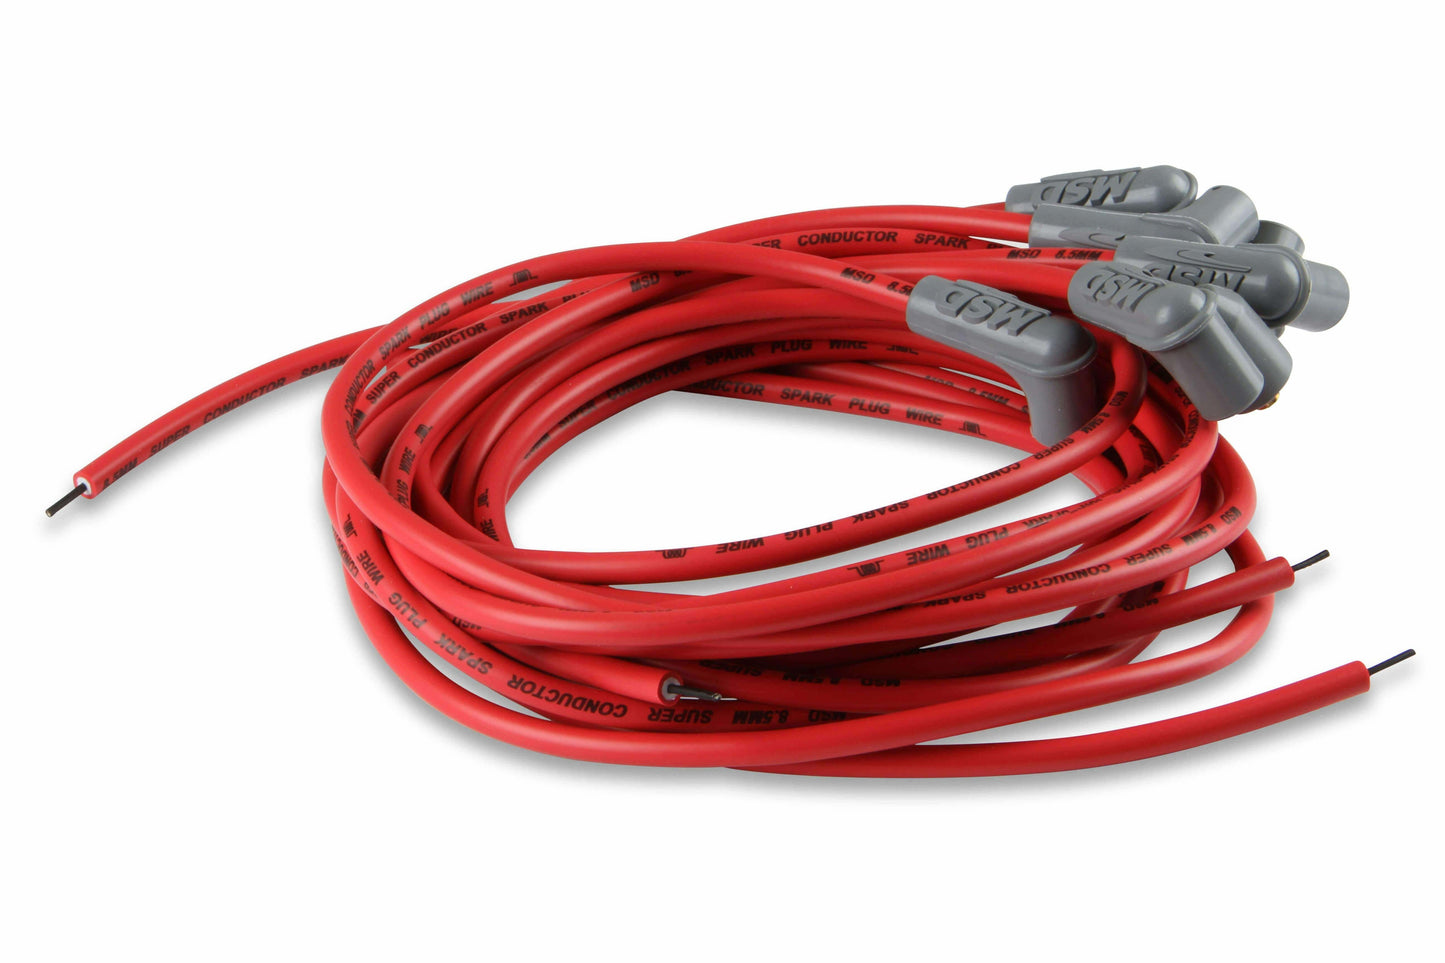 MSD 31239 Spark Plug Wires Spiral Core 8.5mm Red 90 Deg Boots Universal V8 Set